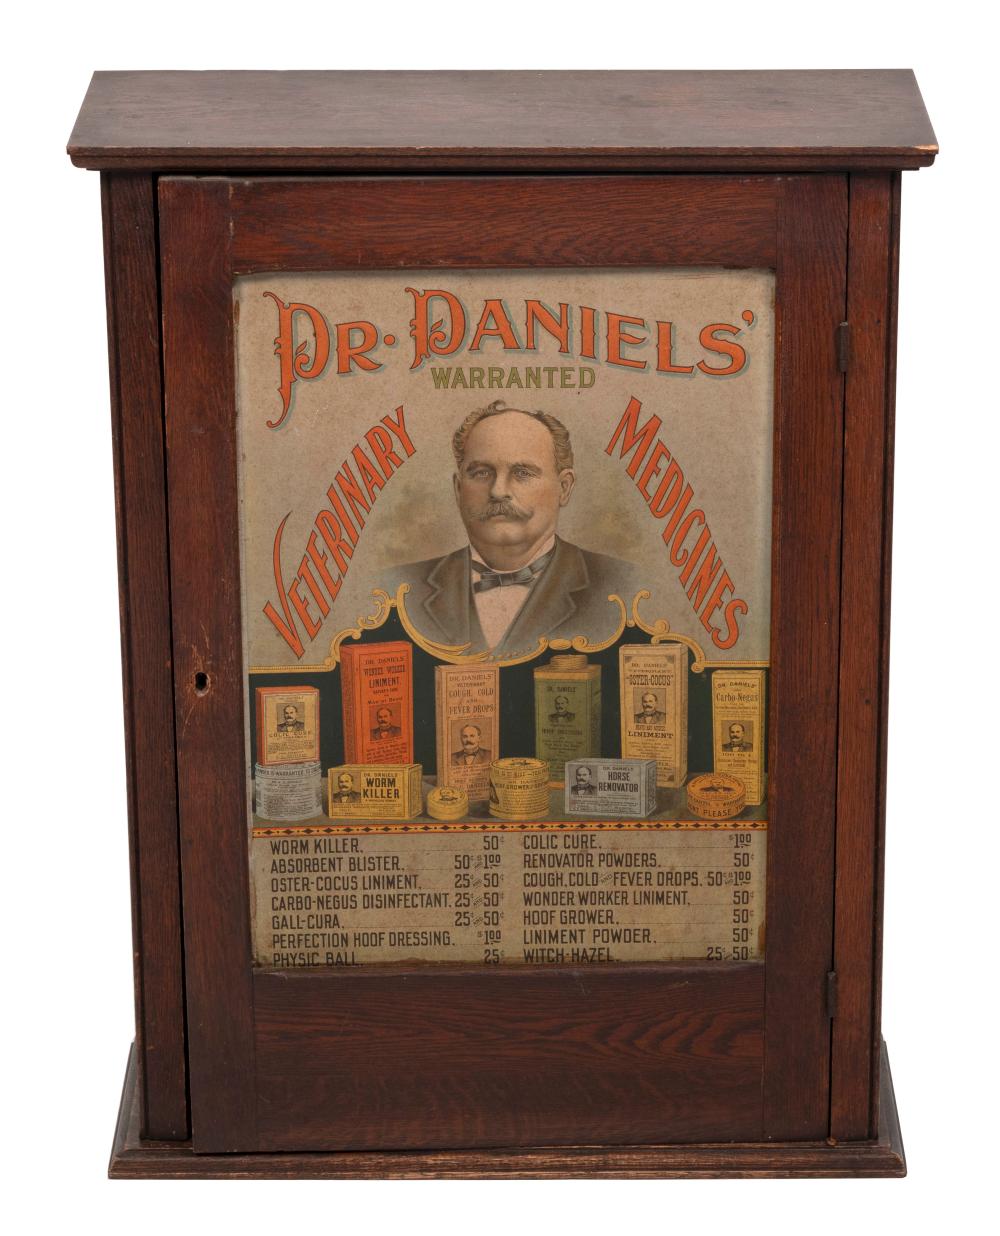 "DR. DANIEL’S WARRANTED VETERINARY